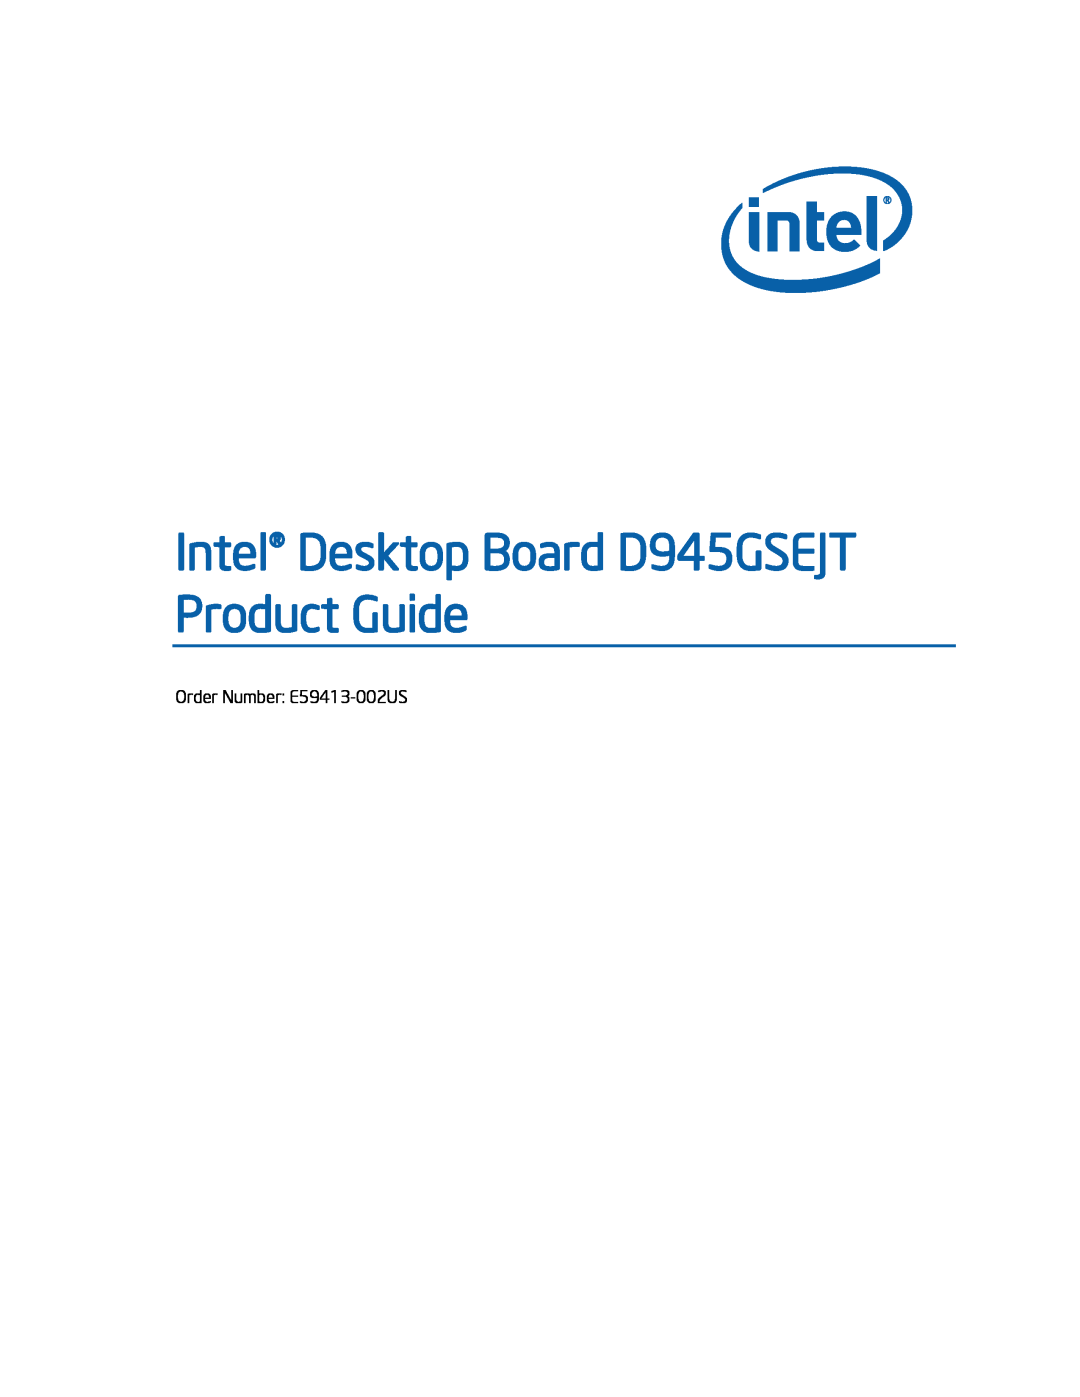 Intel manual Intel Desktop Board D945GSEJT Product Guide, Order Number E59413-002US 